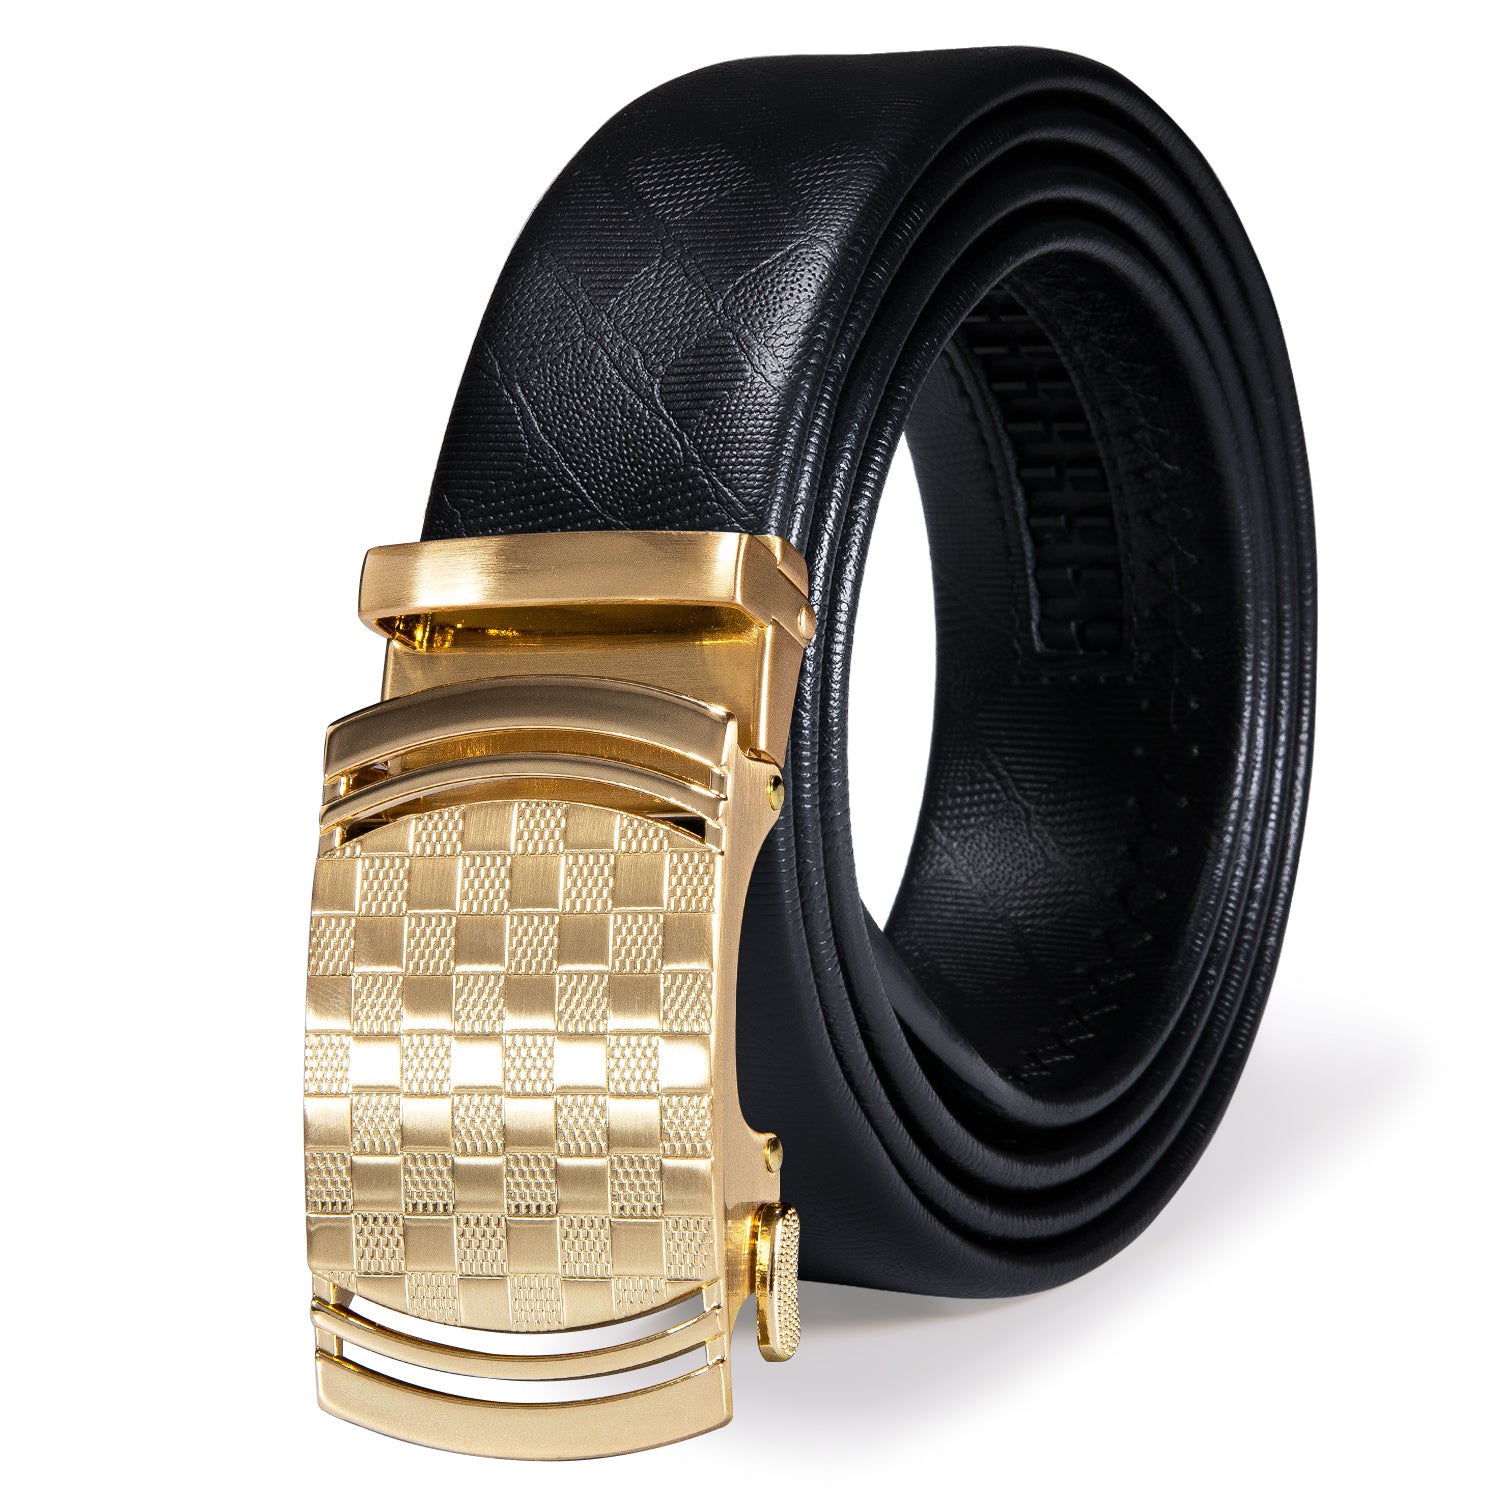 Genuine Leather Black Louis Vuitton Belt